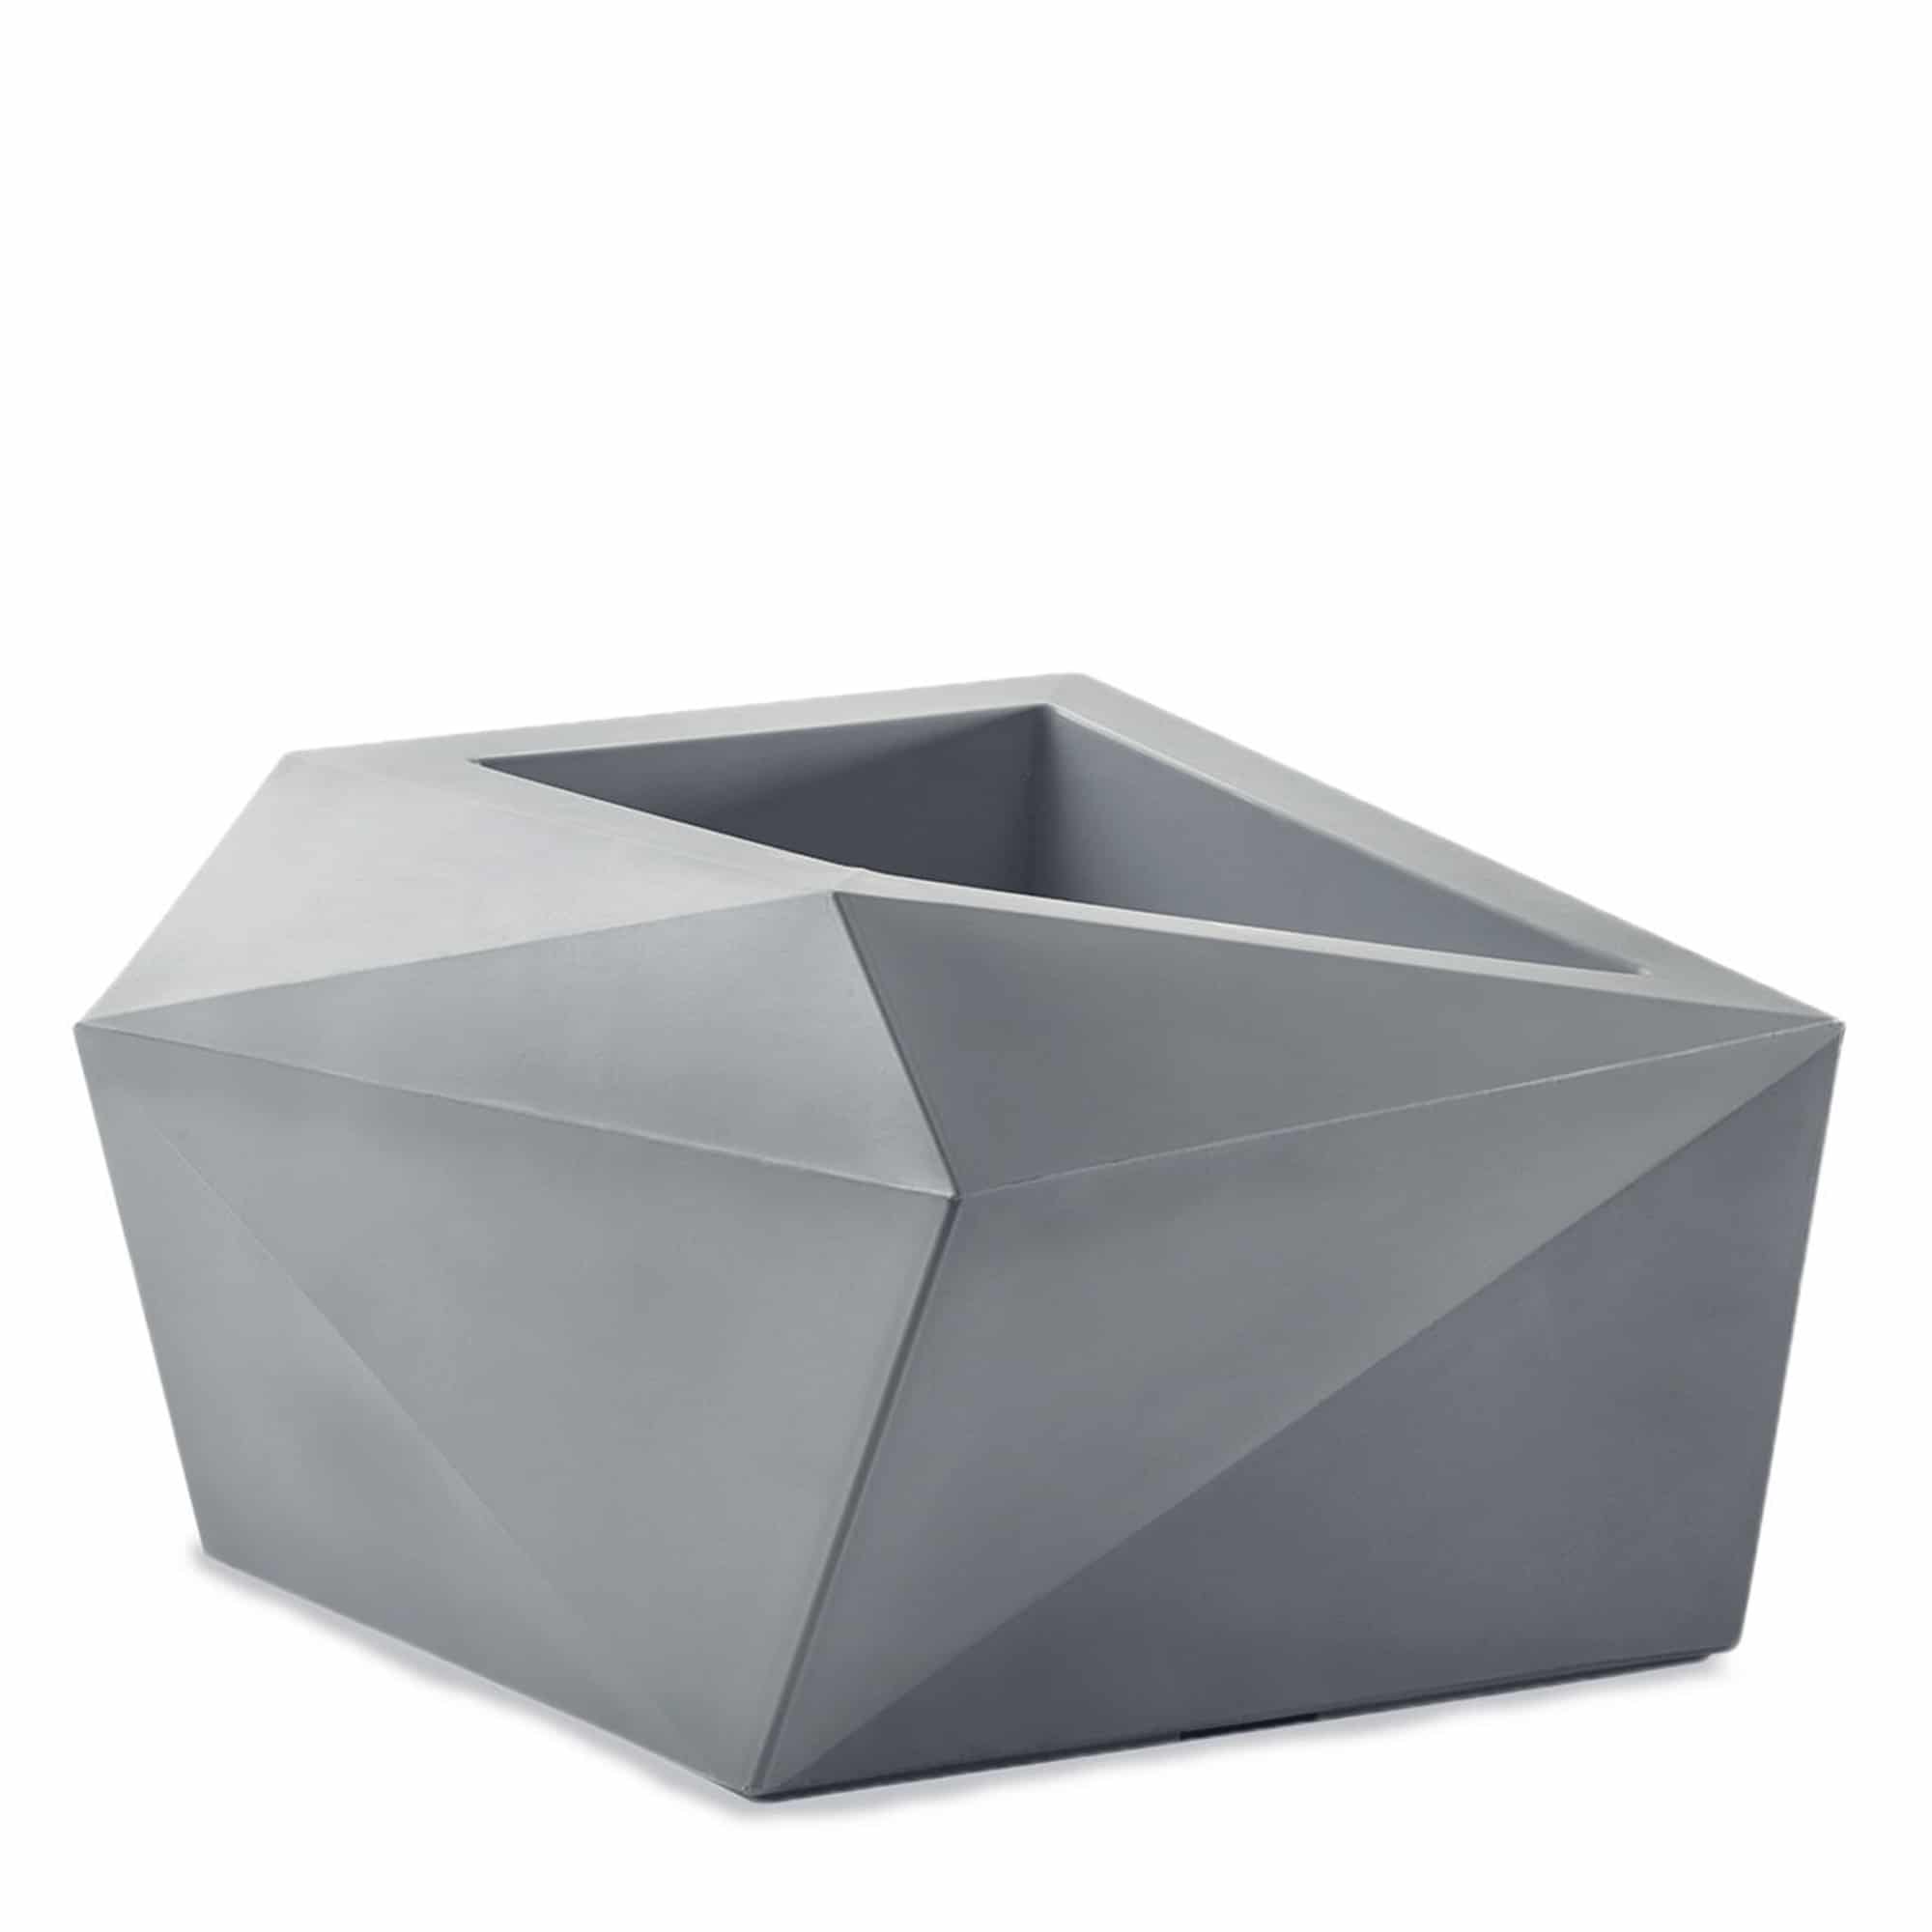 Origami Planter in Ash Grey